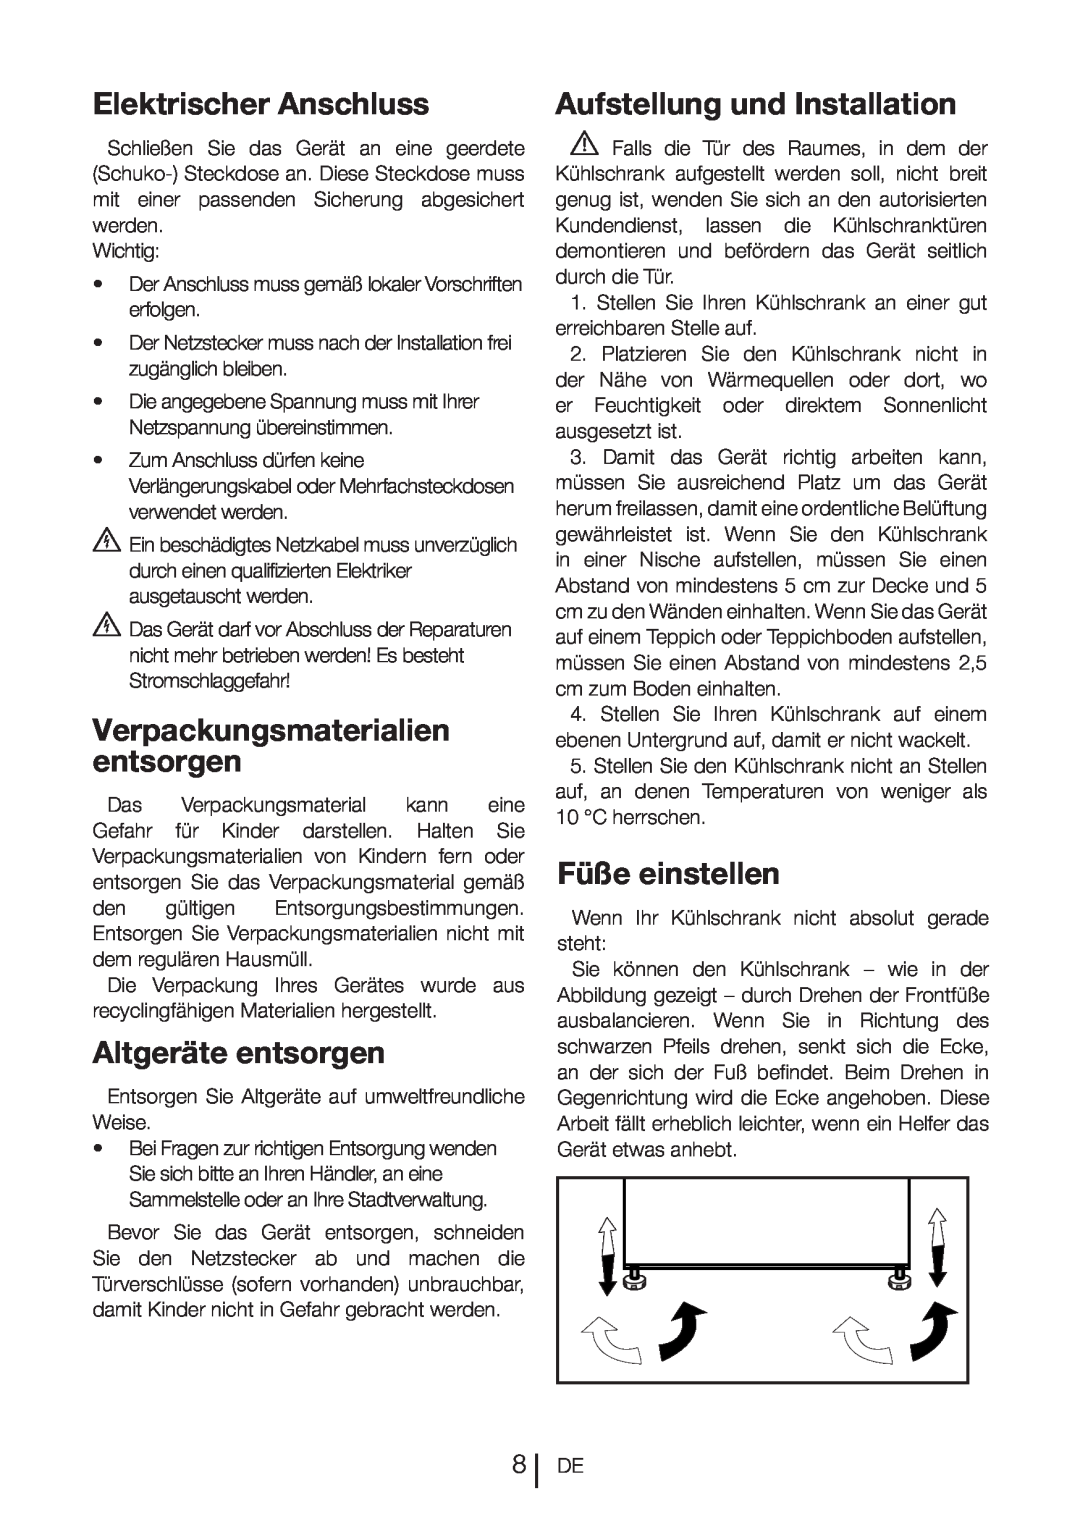 Blomberg DND 9977 PD manual Elektrischer Anschluss, Verpackungsmaterialien entsorgen, Altgeräte entsorgen, Füße einstellen 